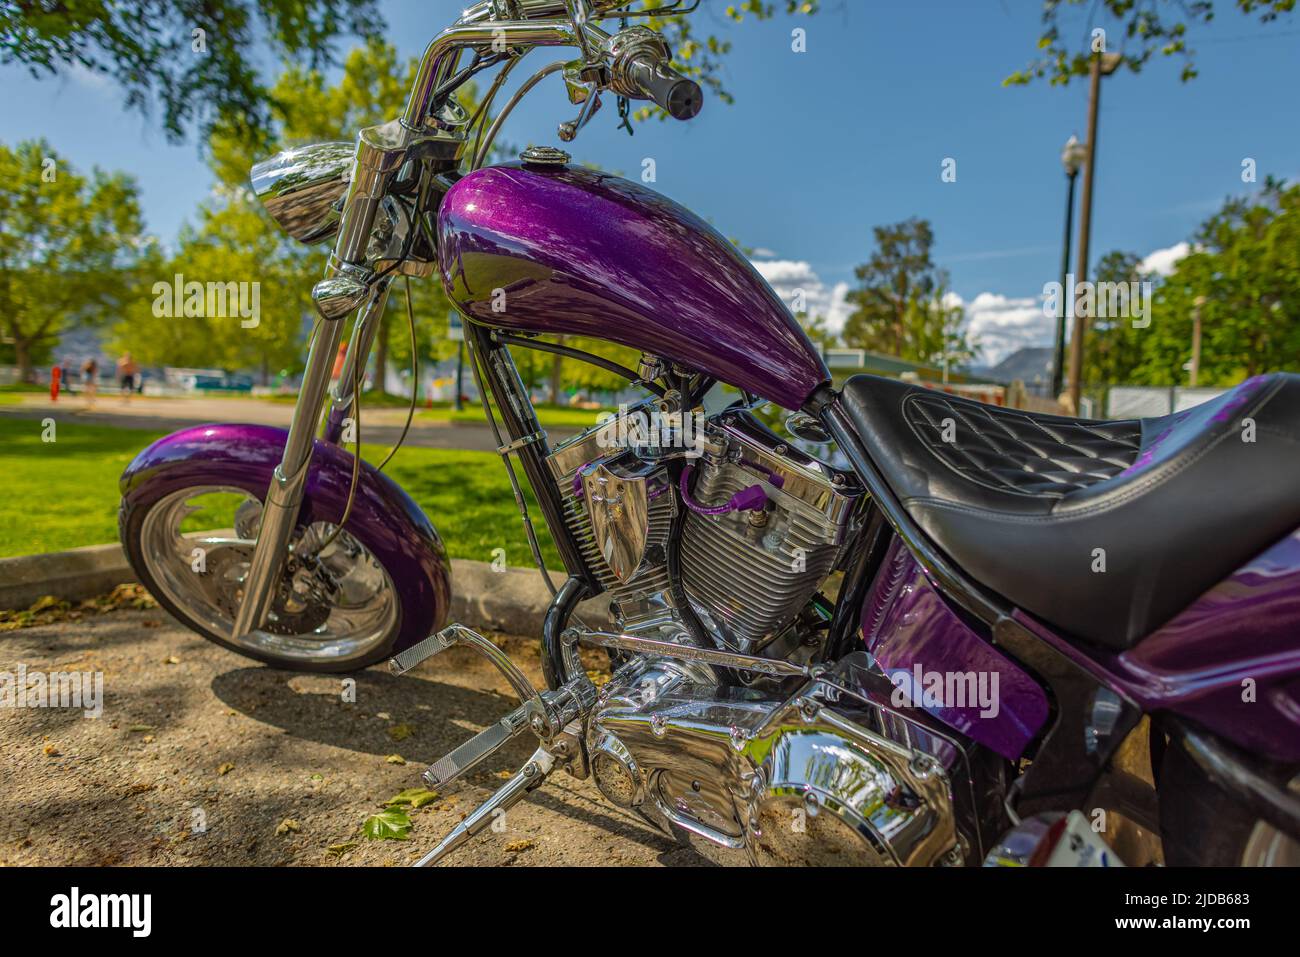 https://c8.alamy.com/comp/2JDB683/purple-custom-chopper-bike-on-a-parking-lot-harley-davidson-sportster-harley-davidson-motorcycles-on-the-parking-2JDB683.jpg